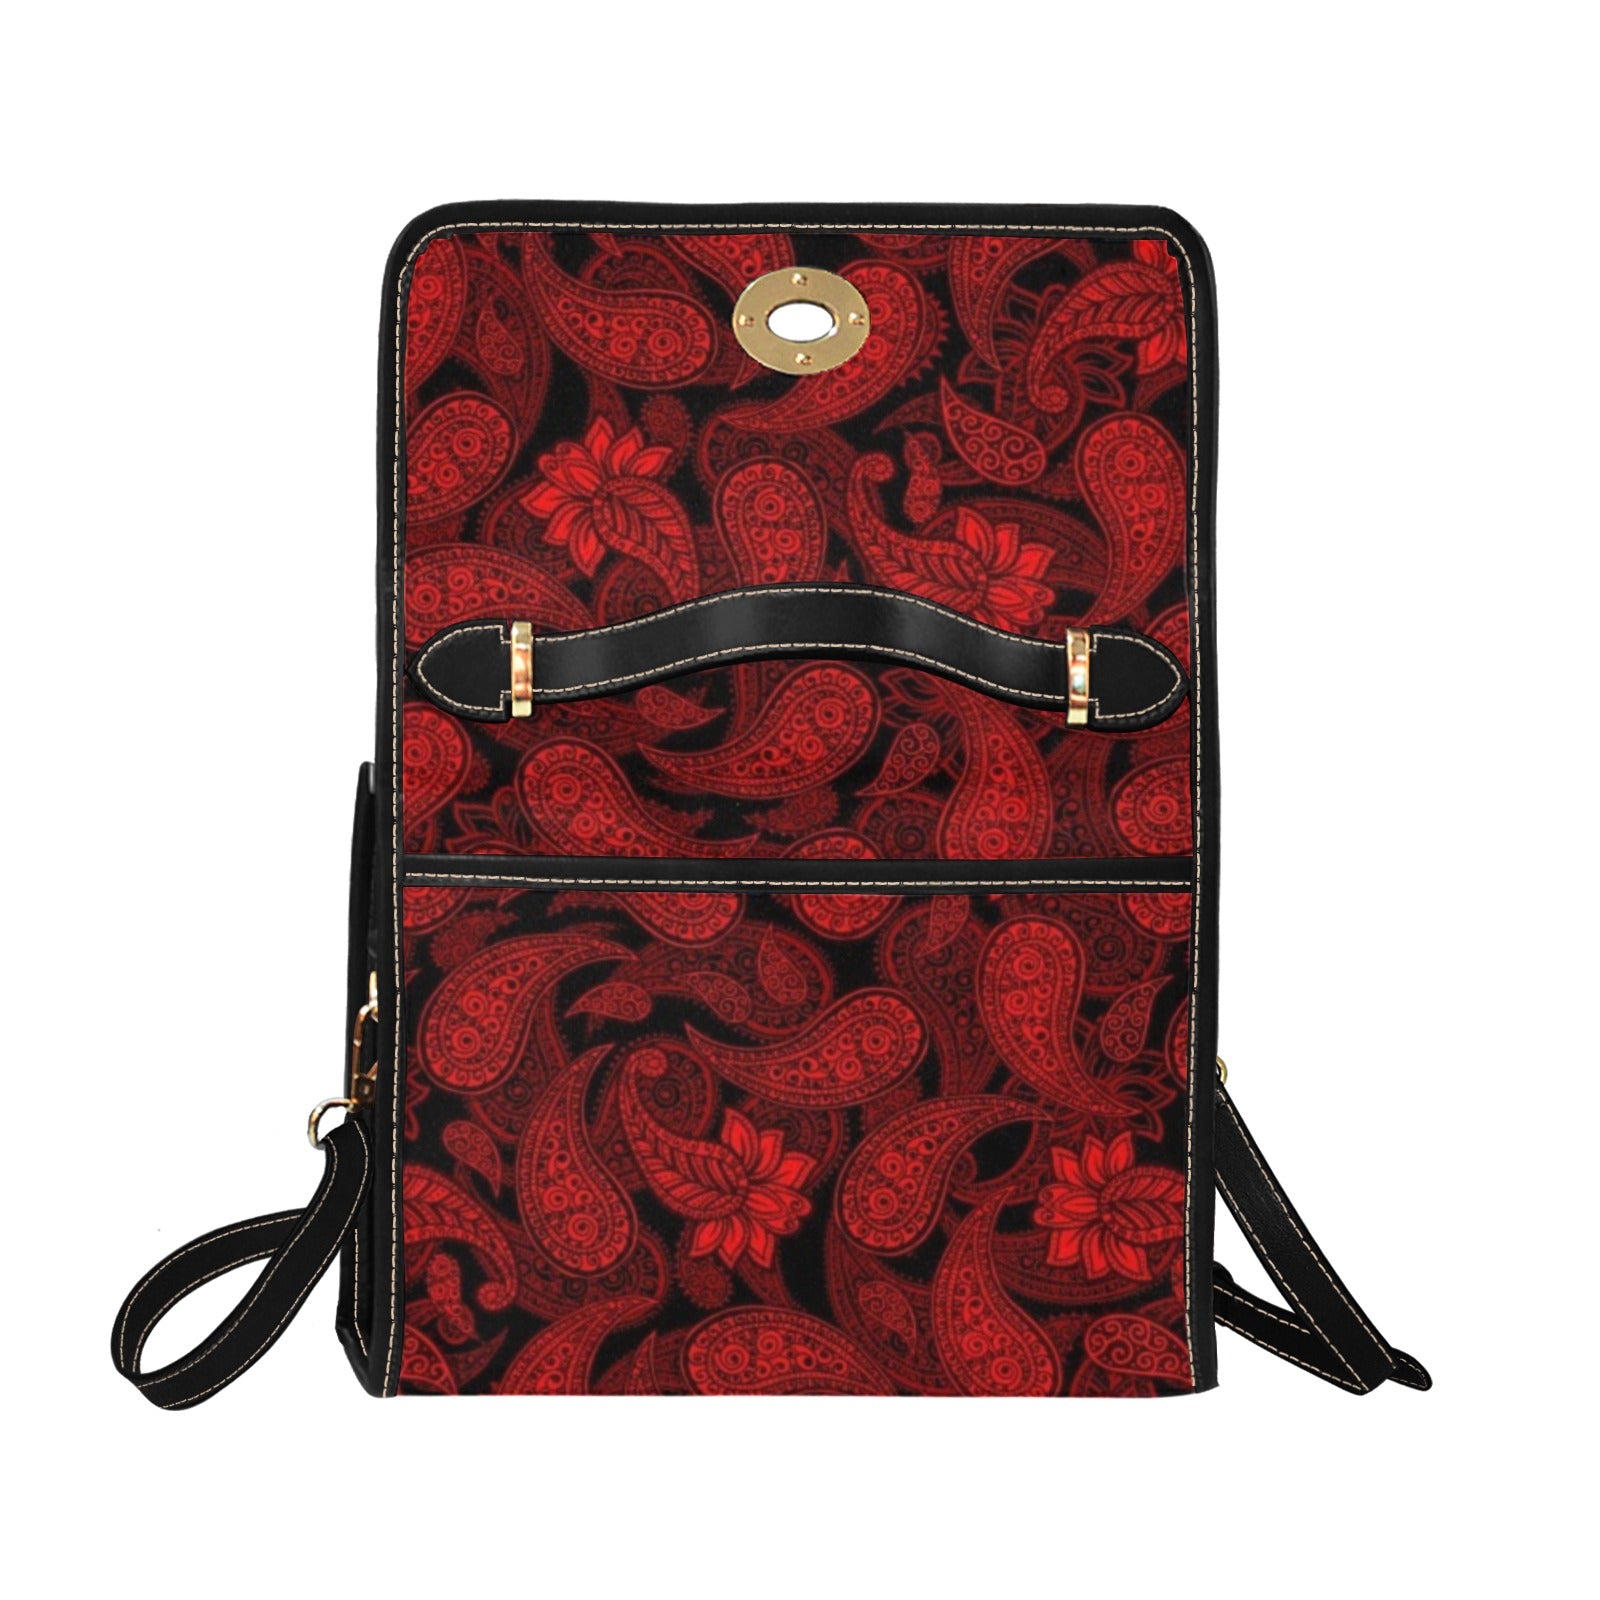 Red Paisley - Waterproof Canvas Handbag